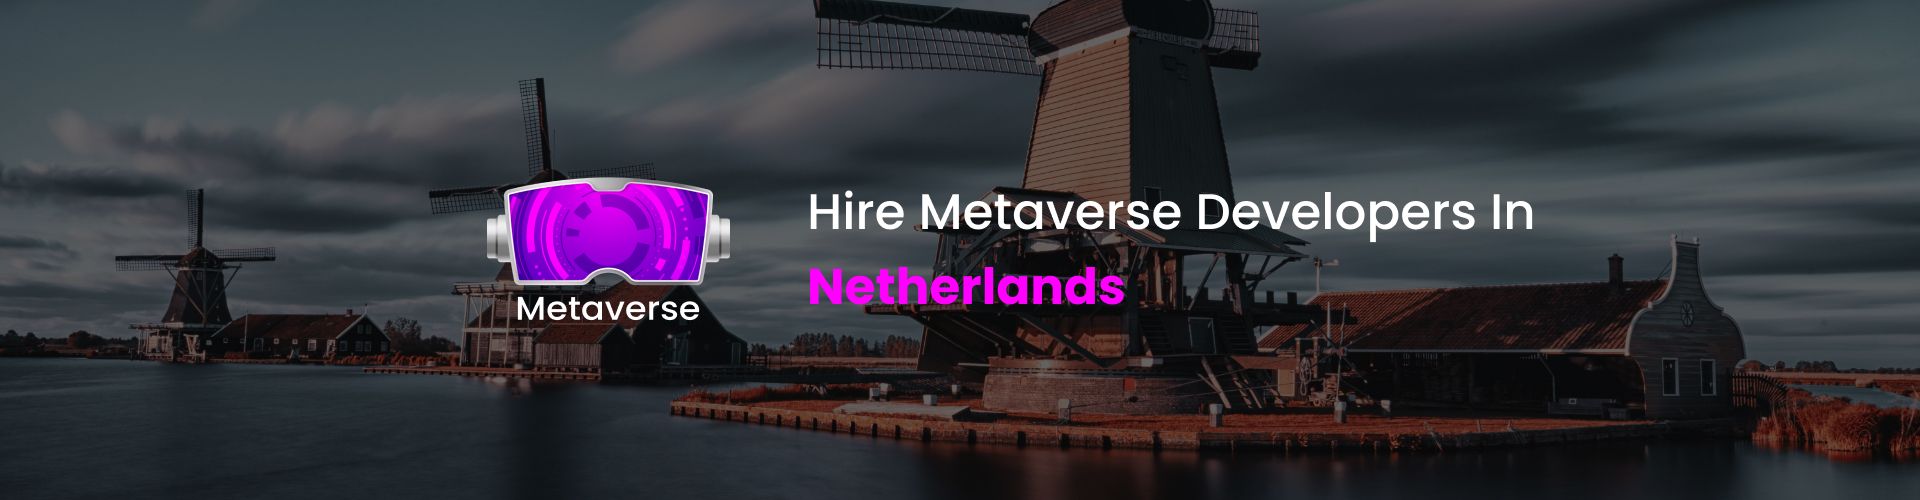 metaverse developers in netherlands